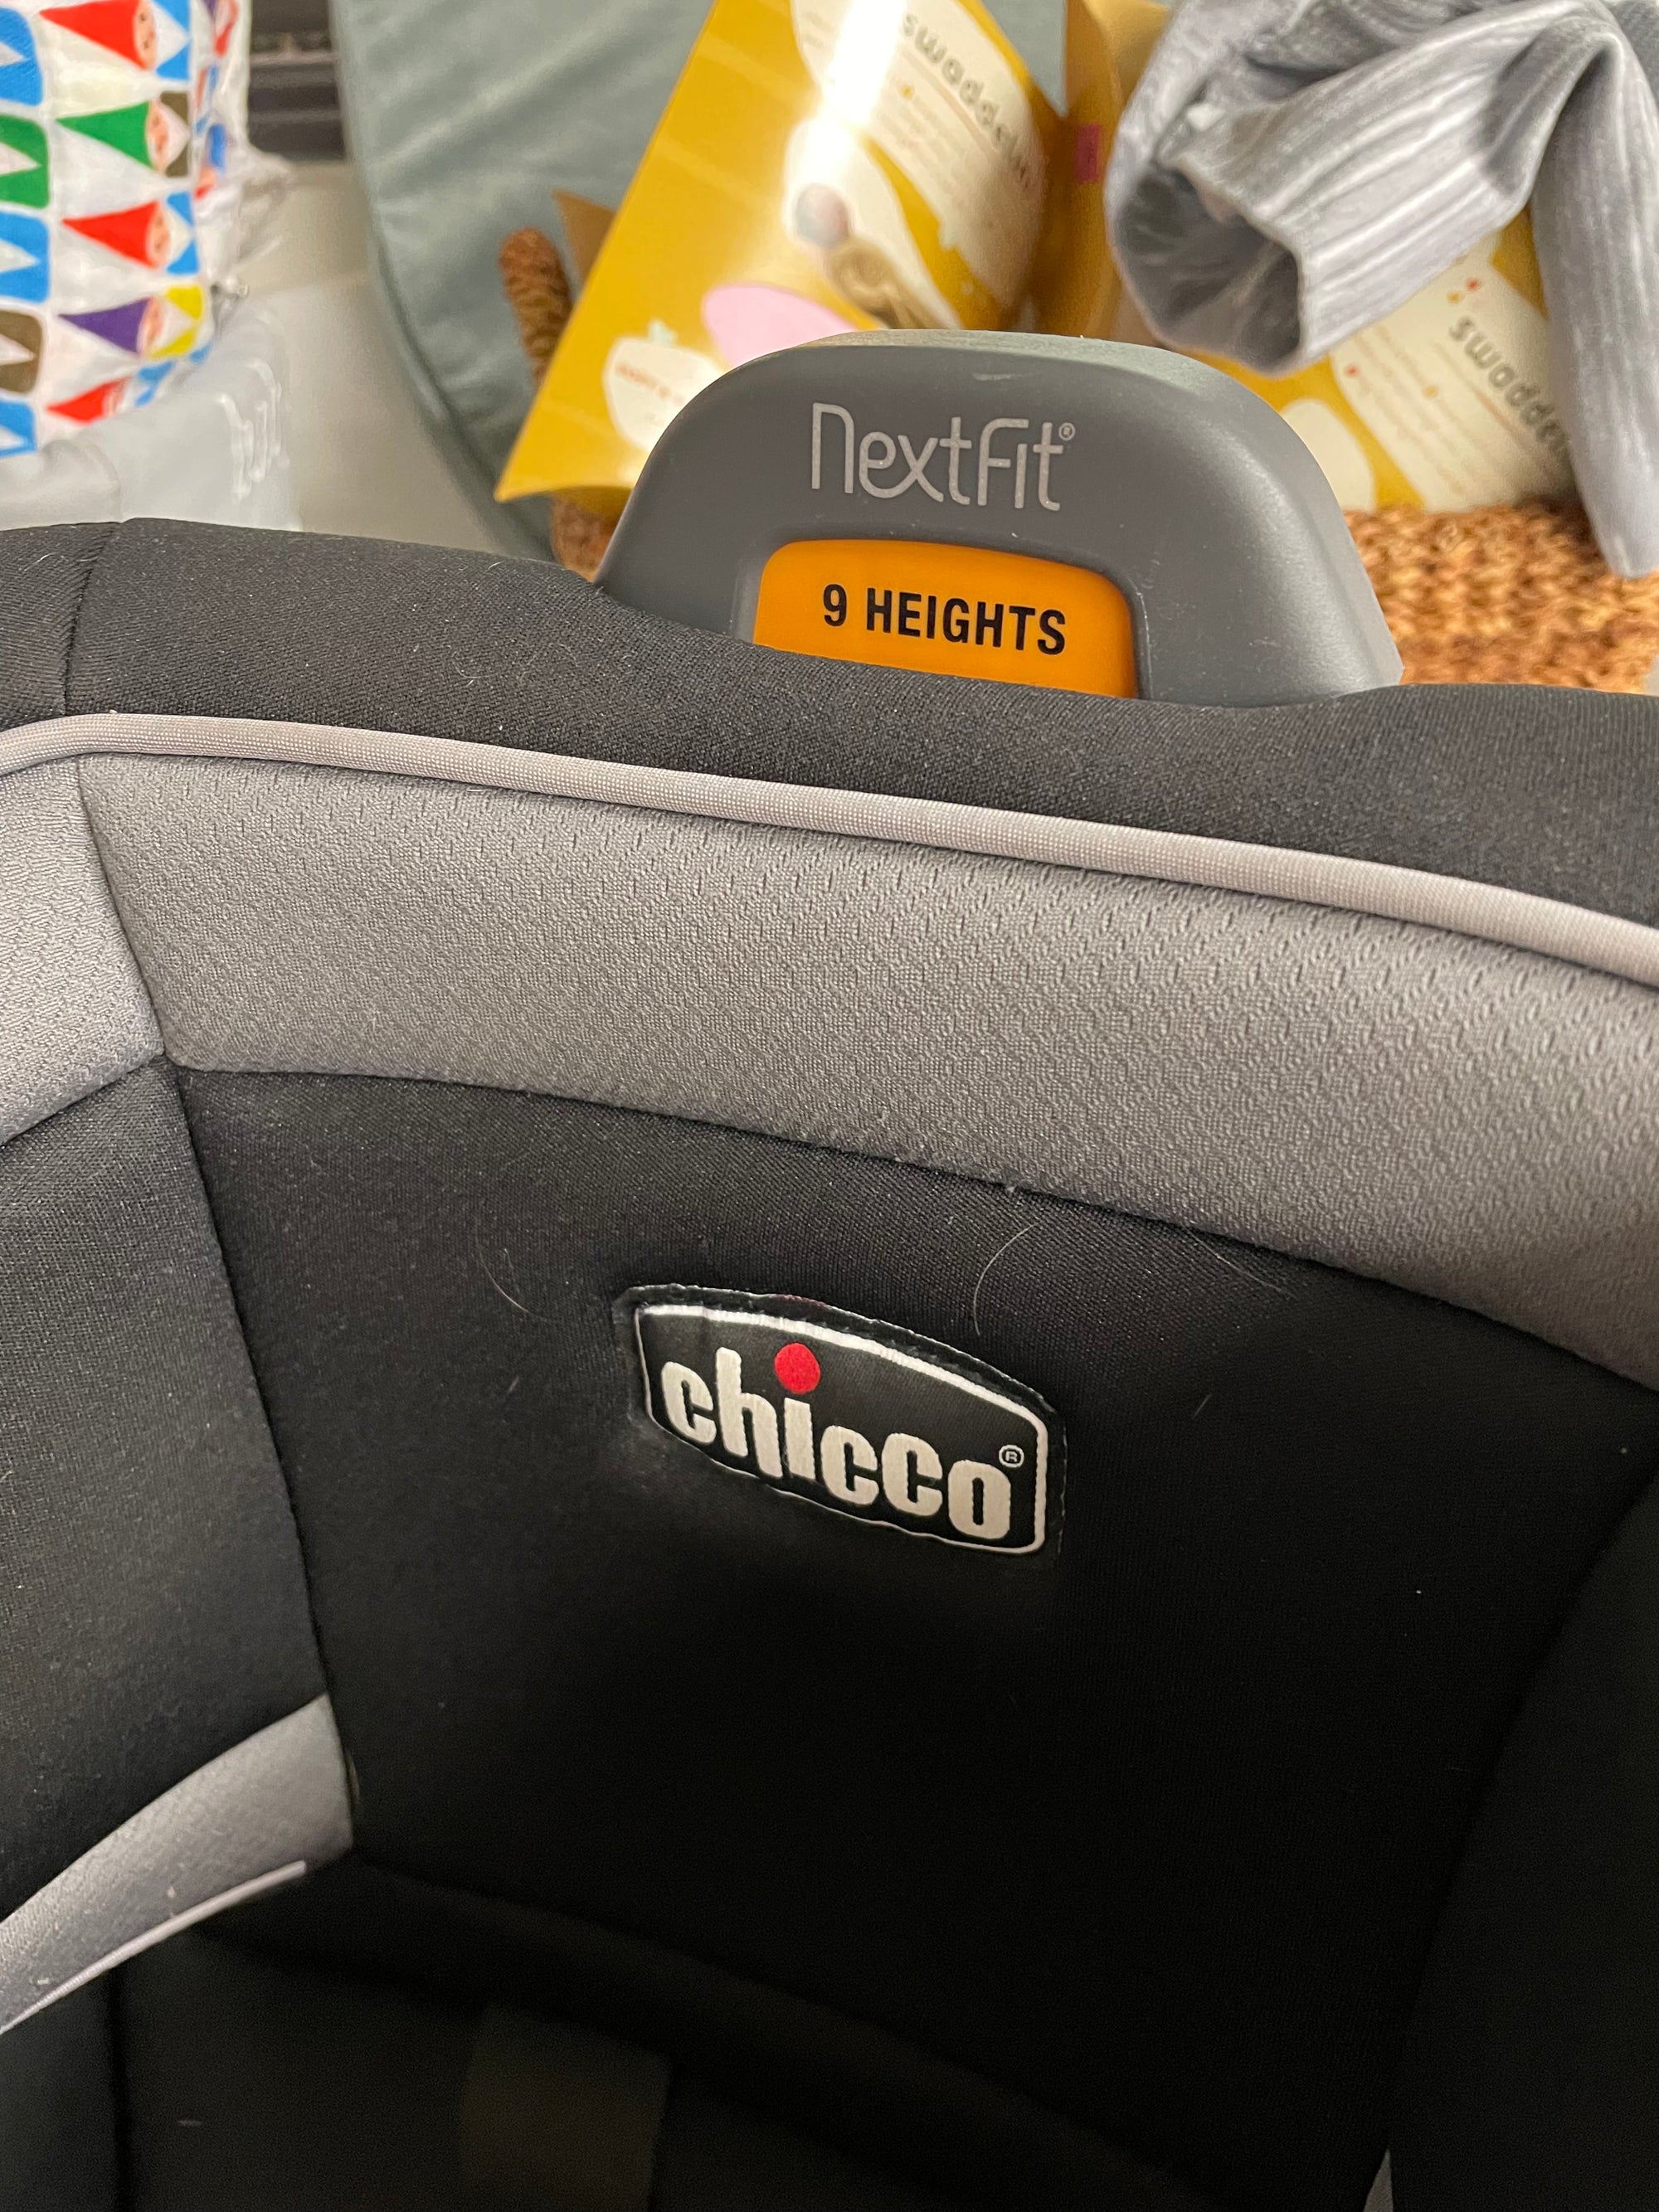 Resale Chicco Nextfit Convertible Black& Grey Car Seat - Exp. Aug. 2027